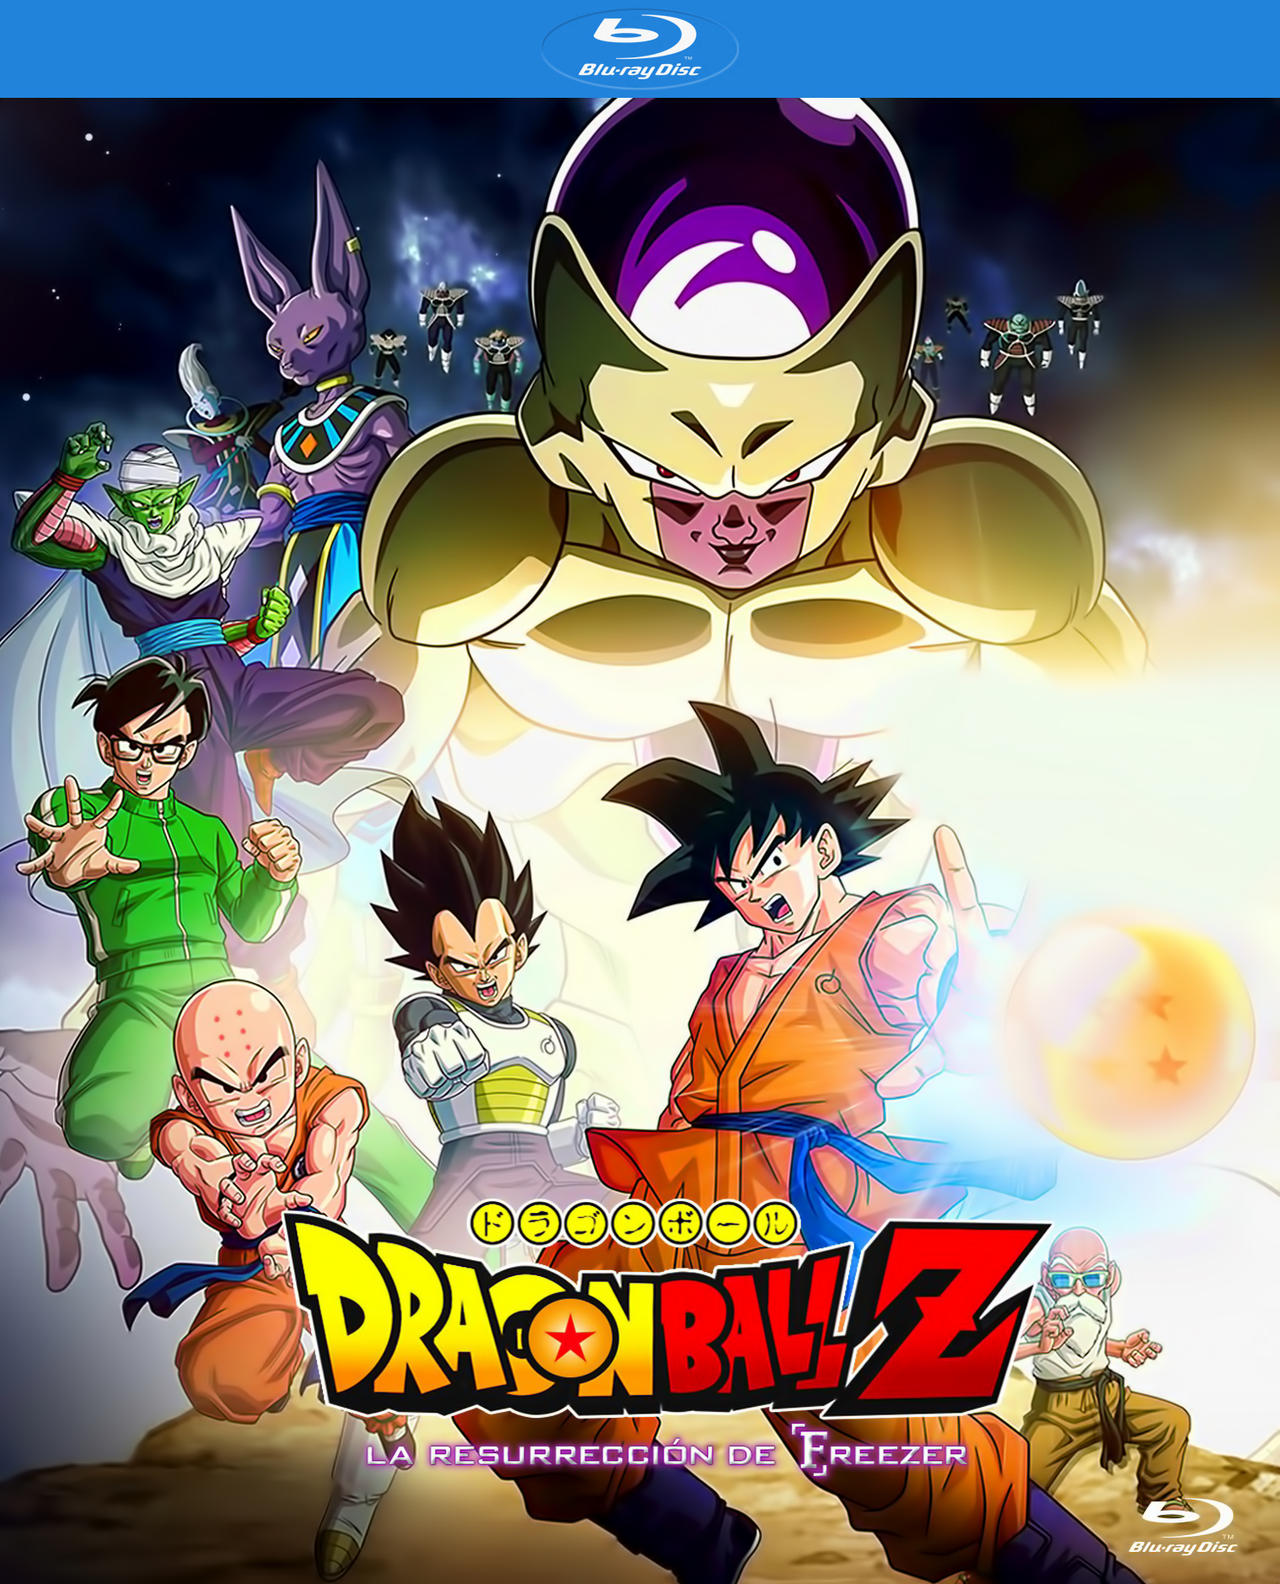 Dragon Ball Super - Super Hero Poster by obsolete00 on DeviantArt